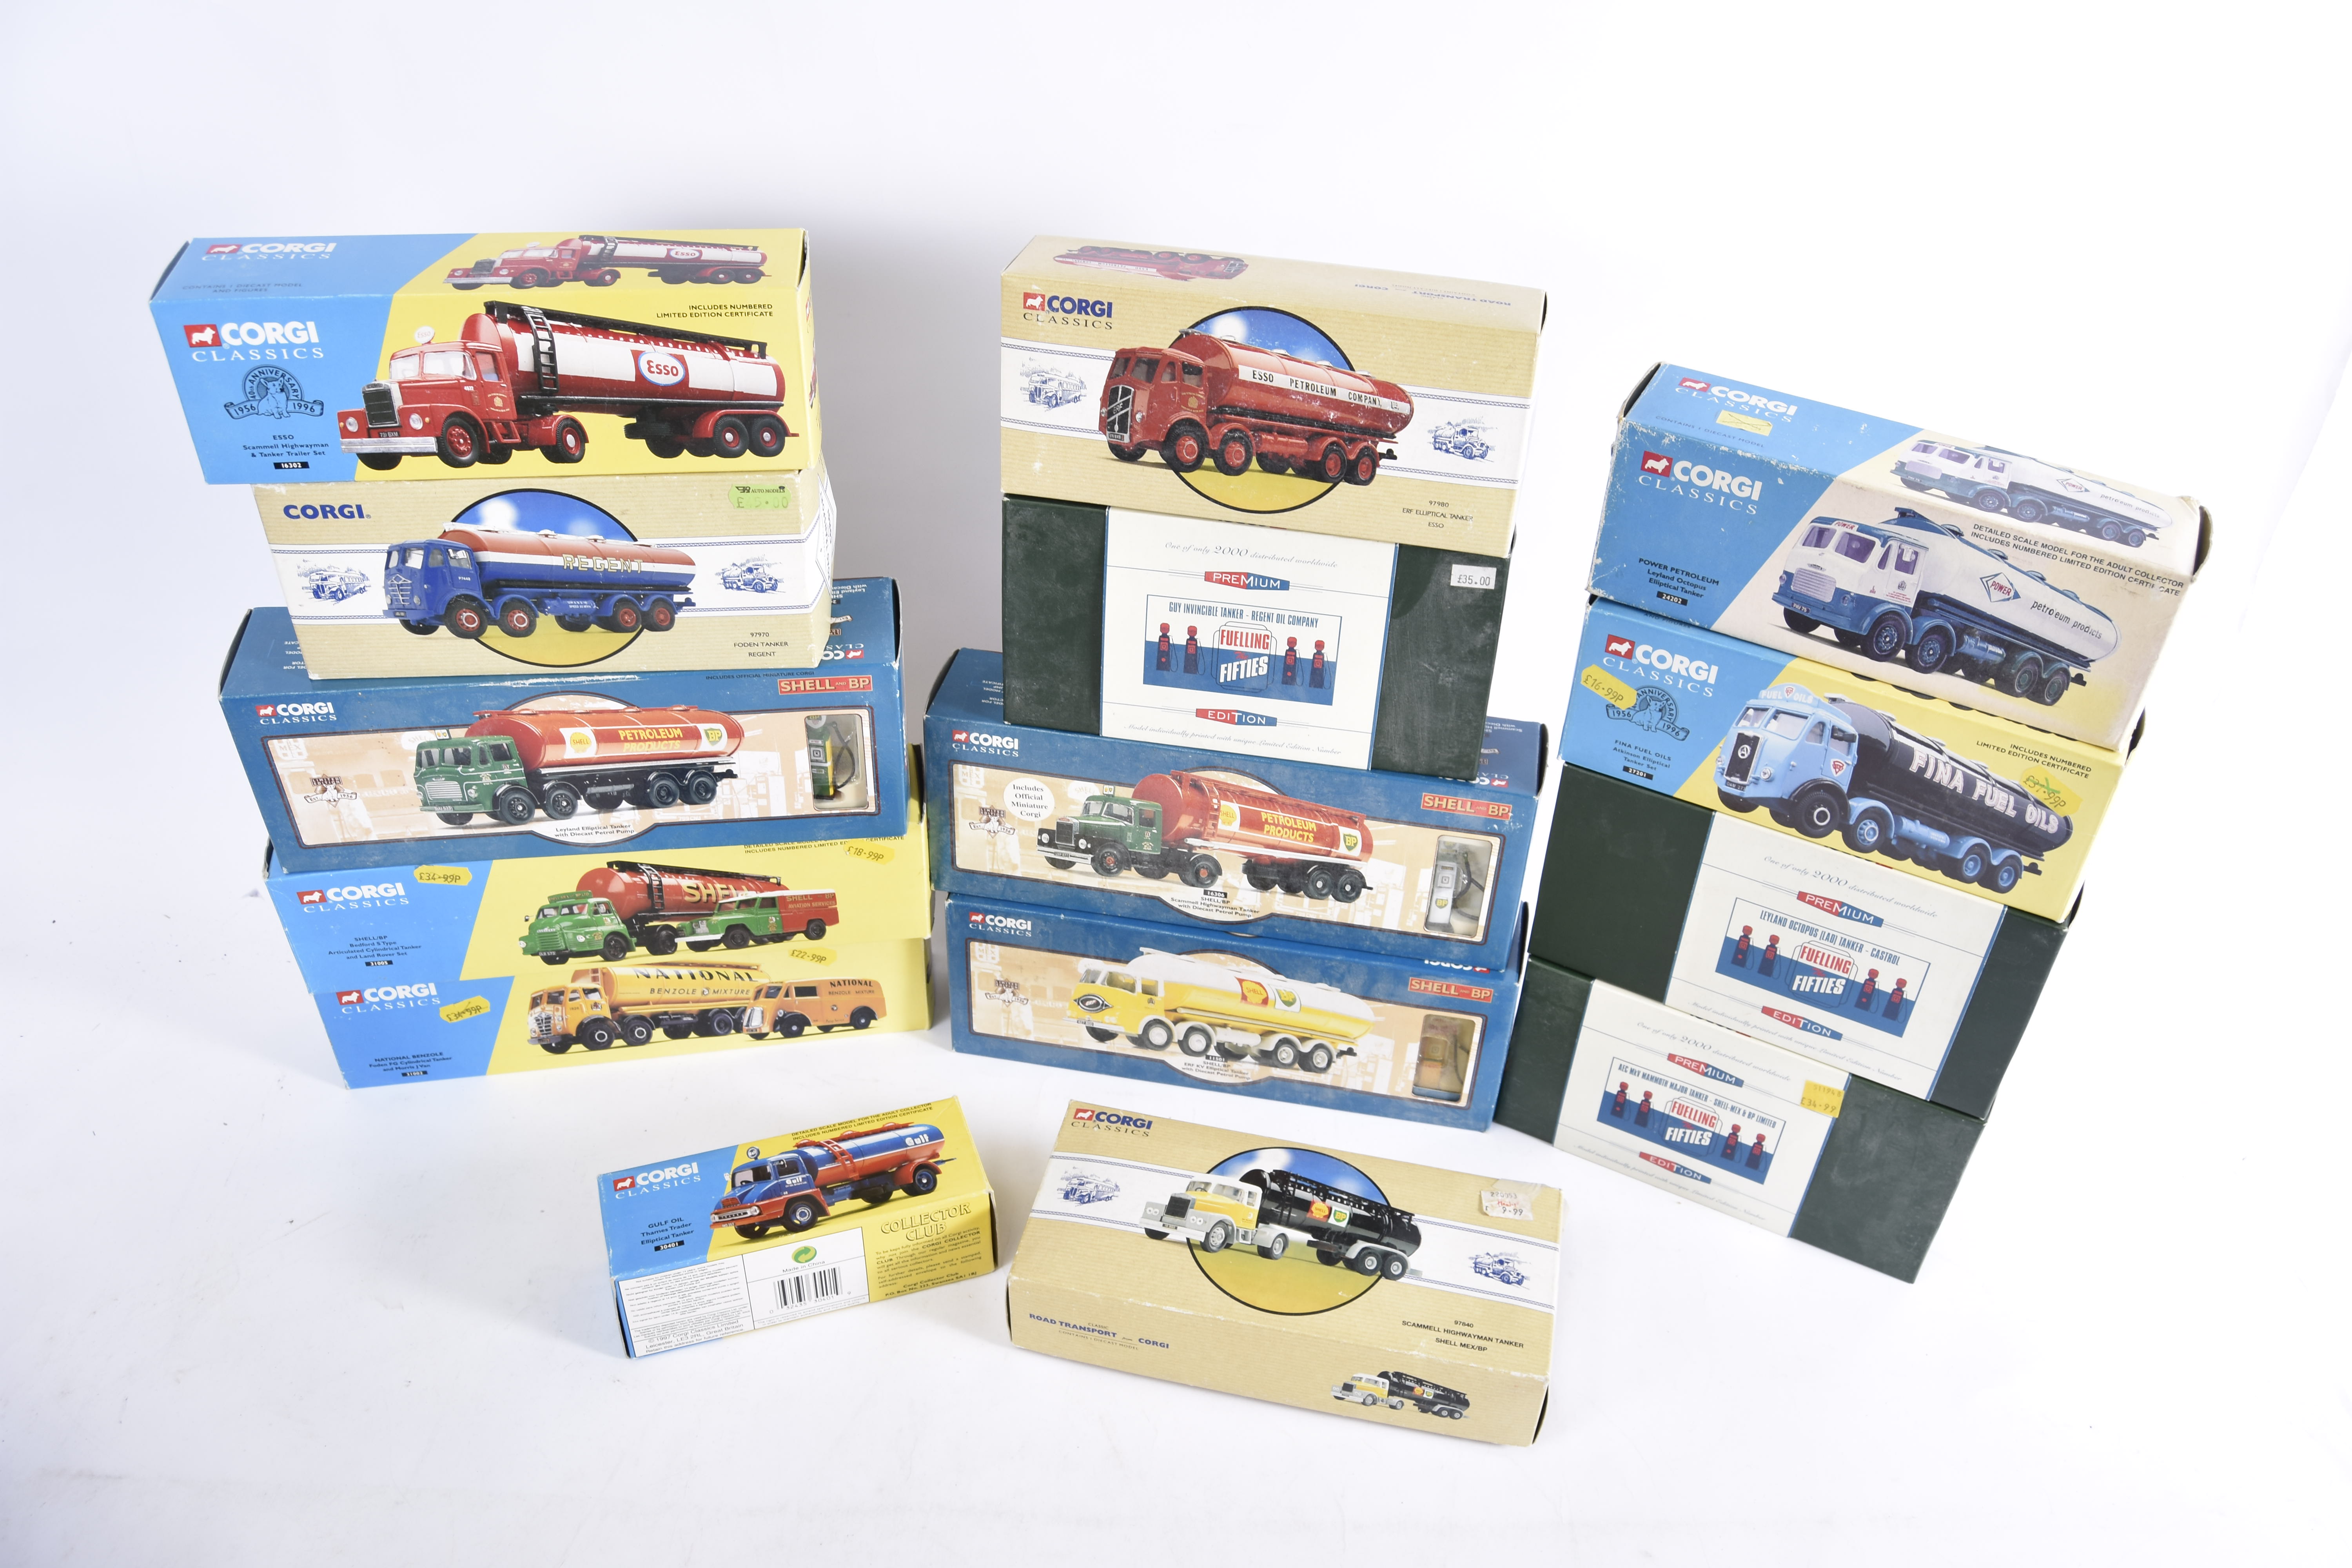 Corgi Classics Fuel Tanker Die Cast Models, a boxed collection of vintage vehicles comprises